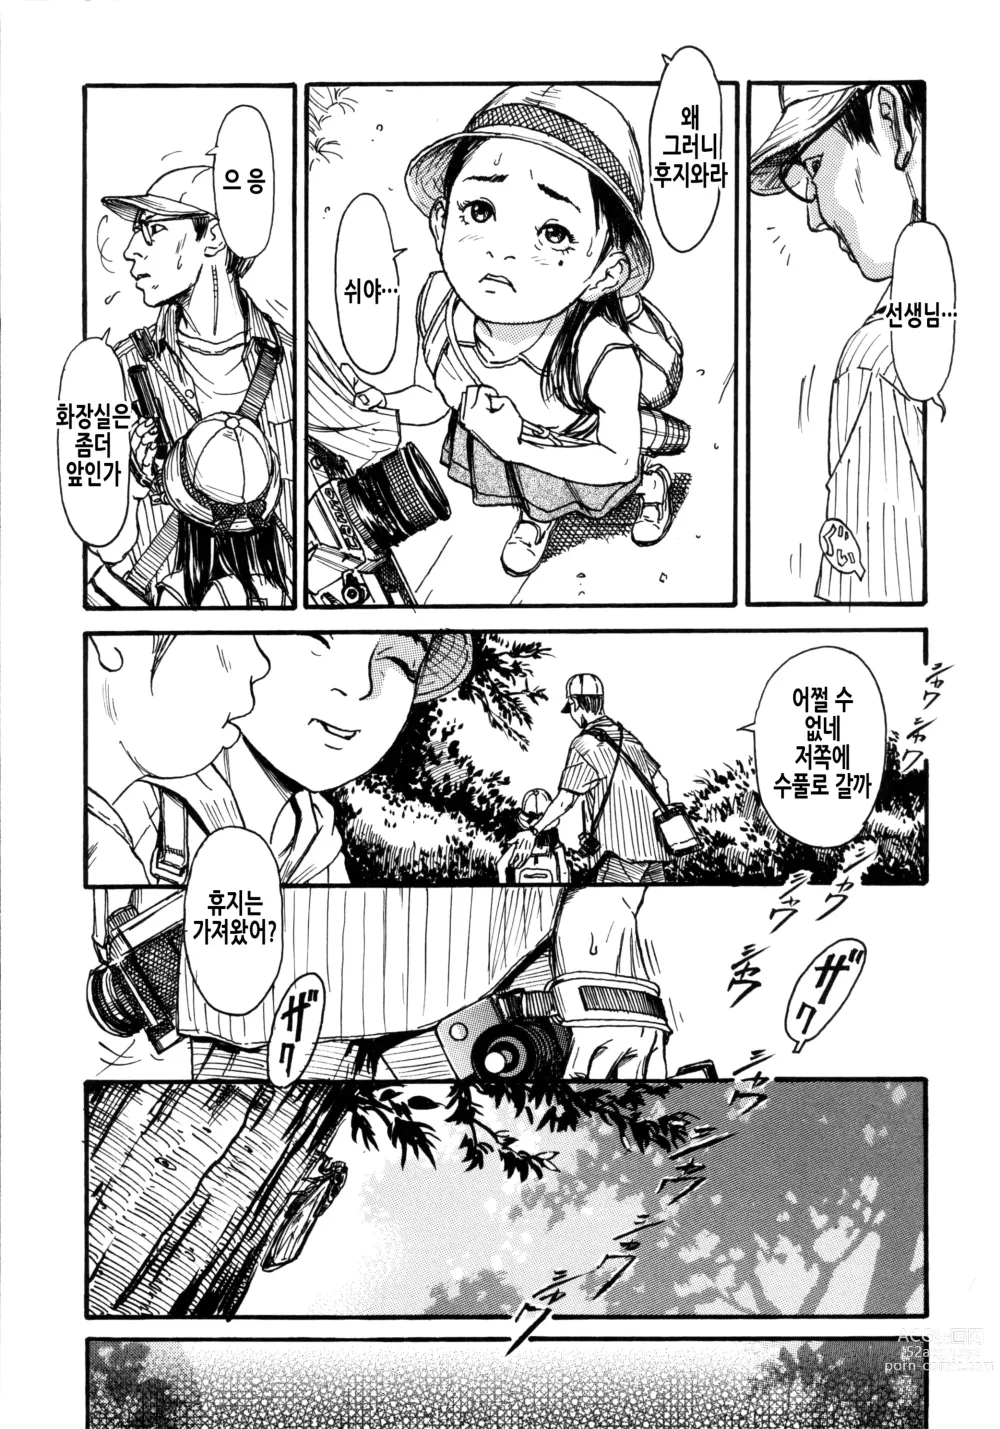 Page 220 of manga 소부 팔경